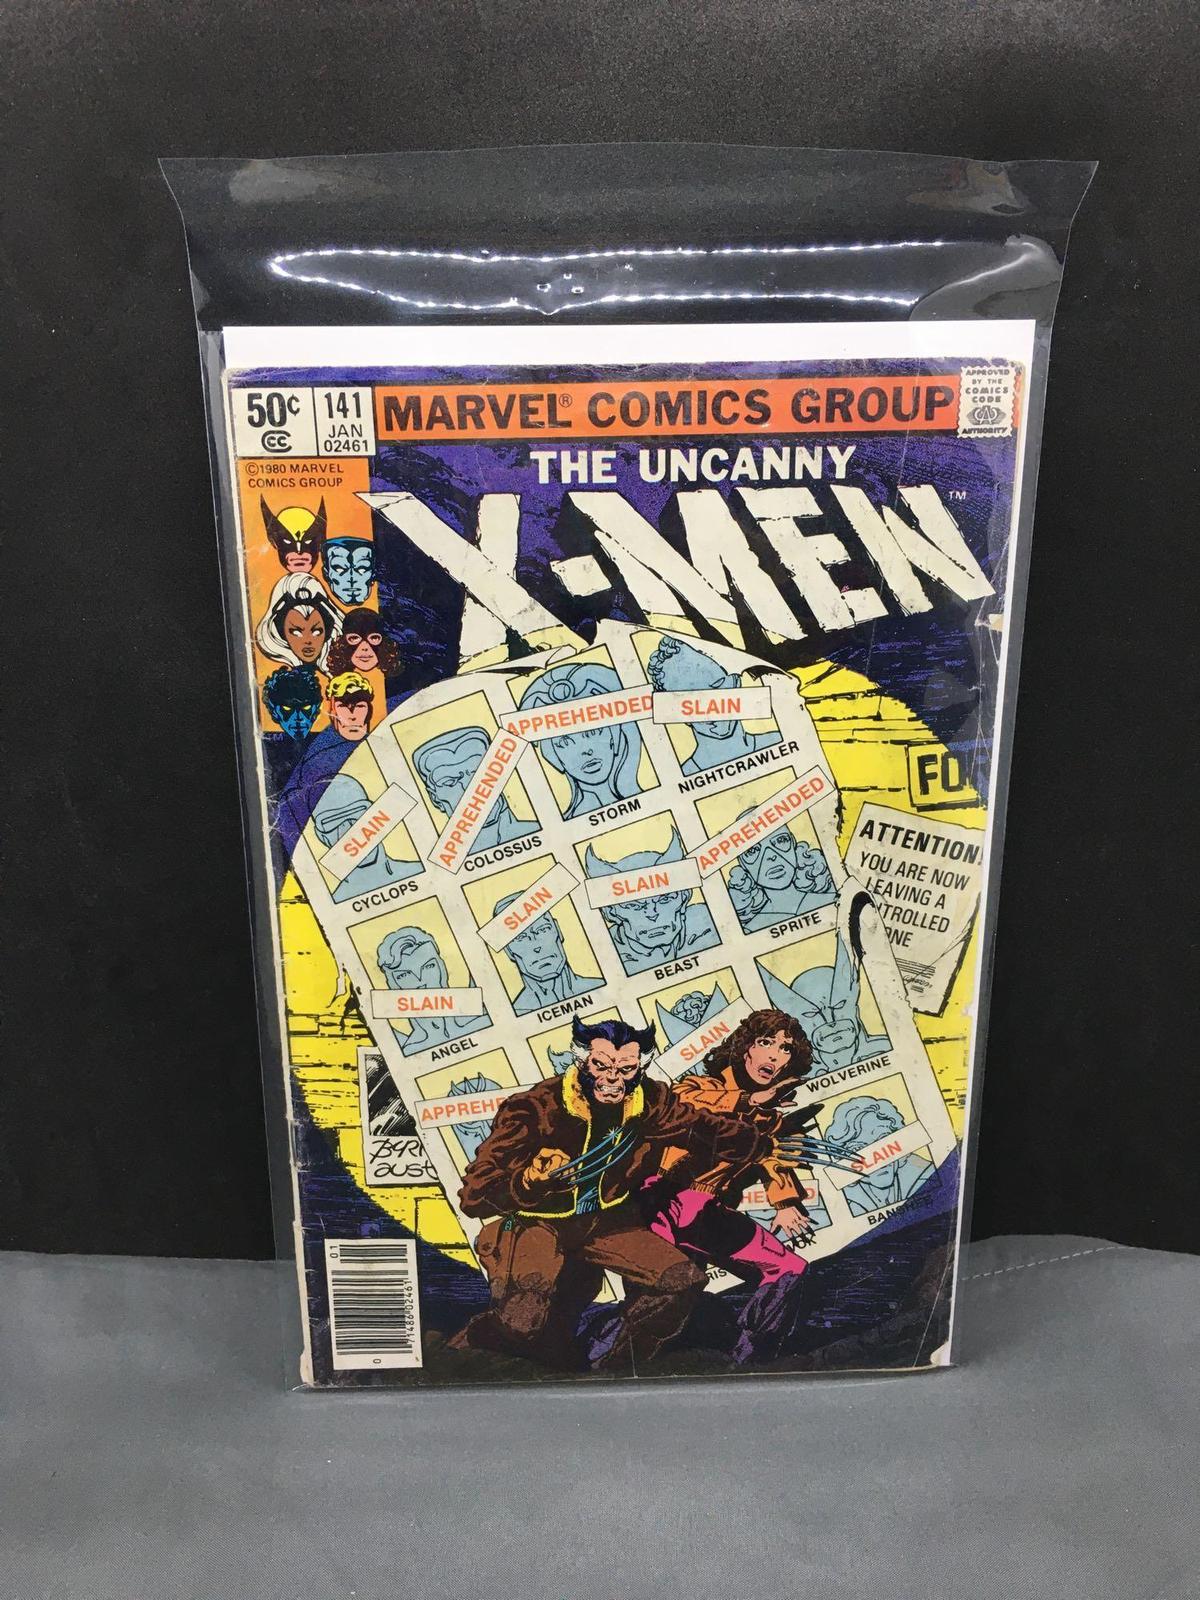 1981 Marvel Comics UNCANNY X-MEN #141 Bronze Age KEY Comic Book - 1st New Brotherhood of Mutants